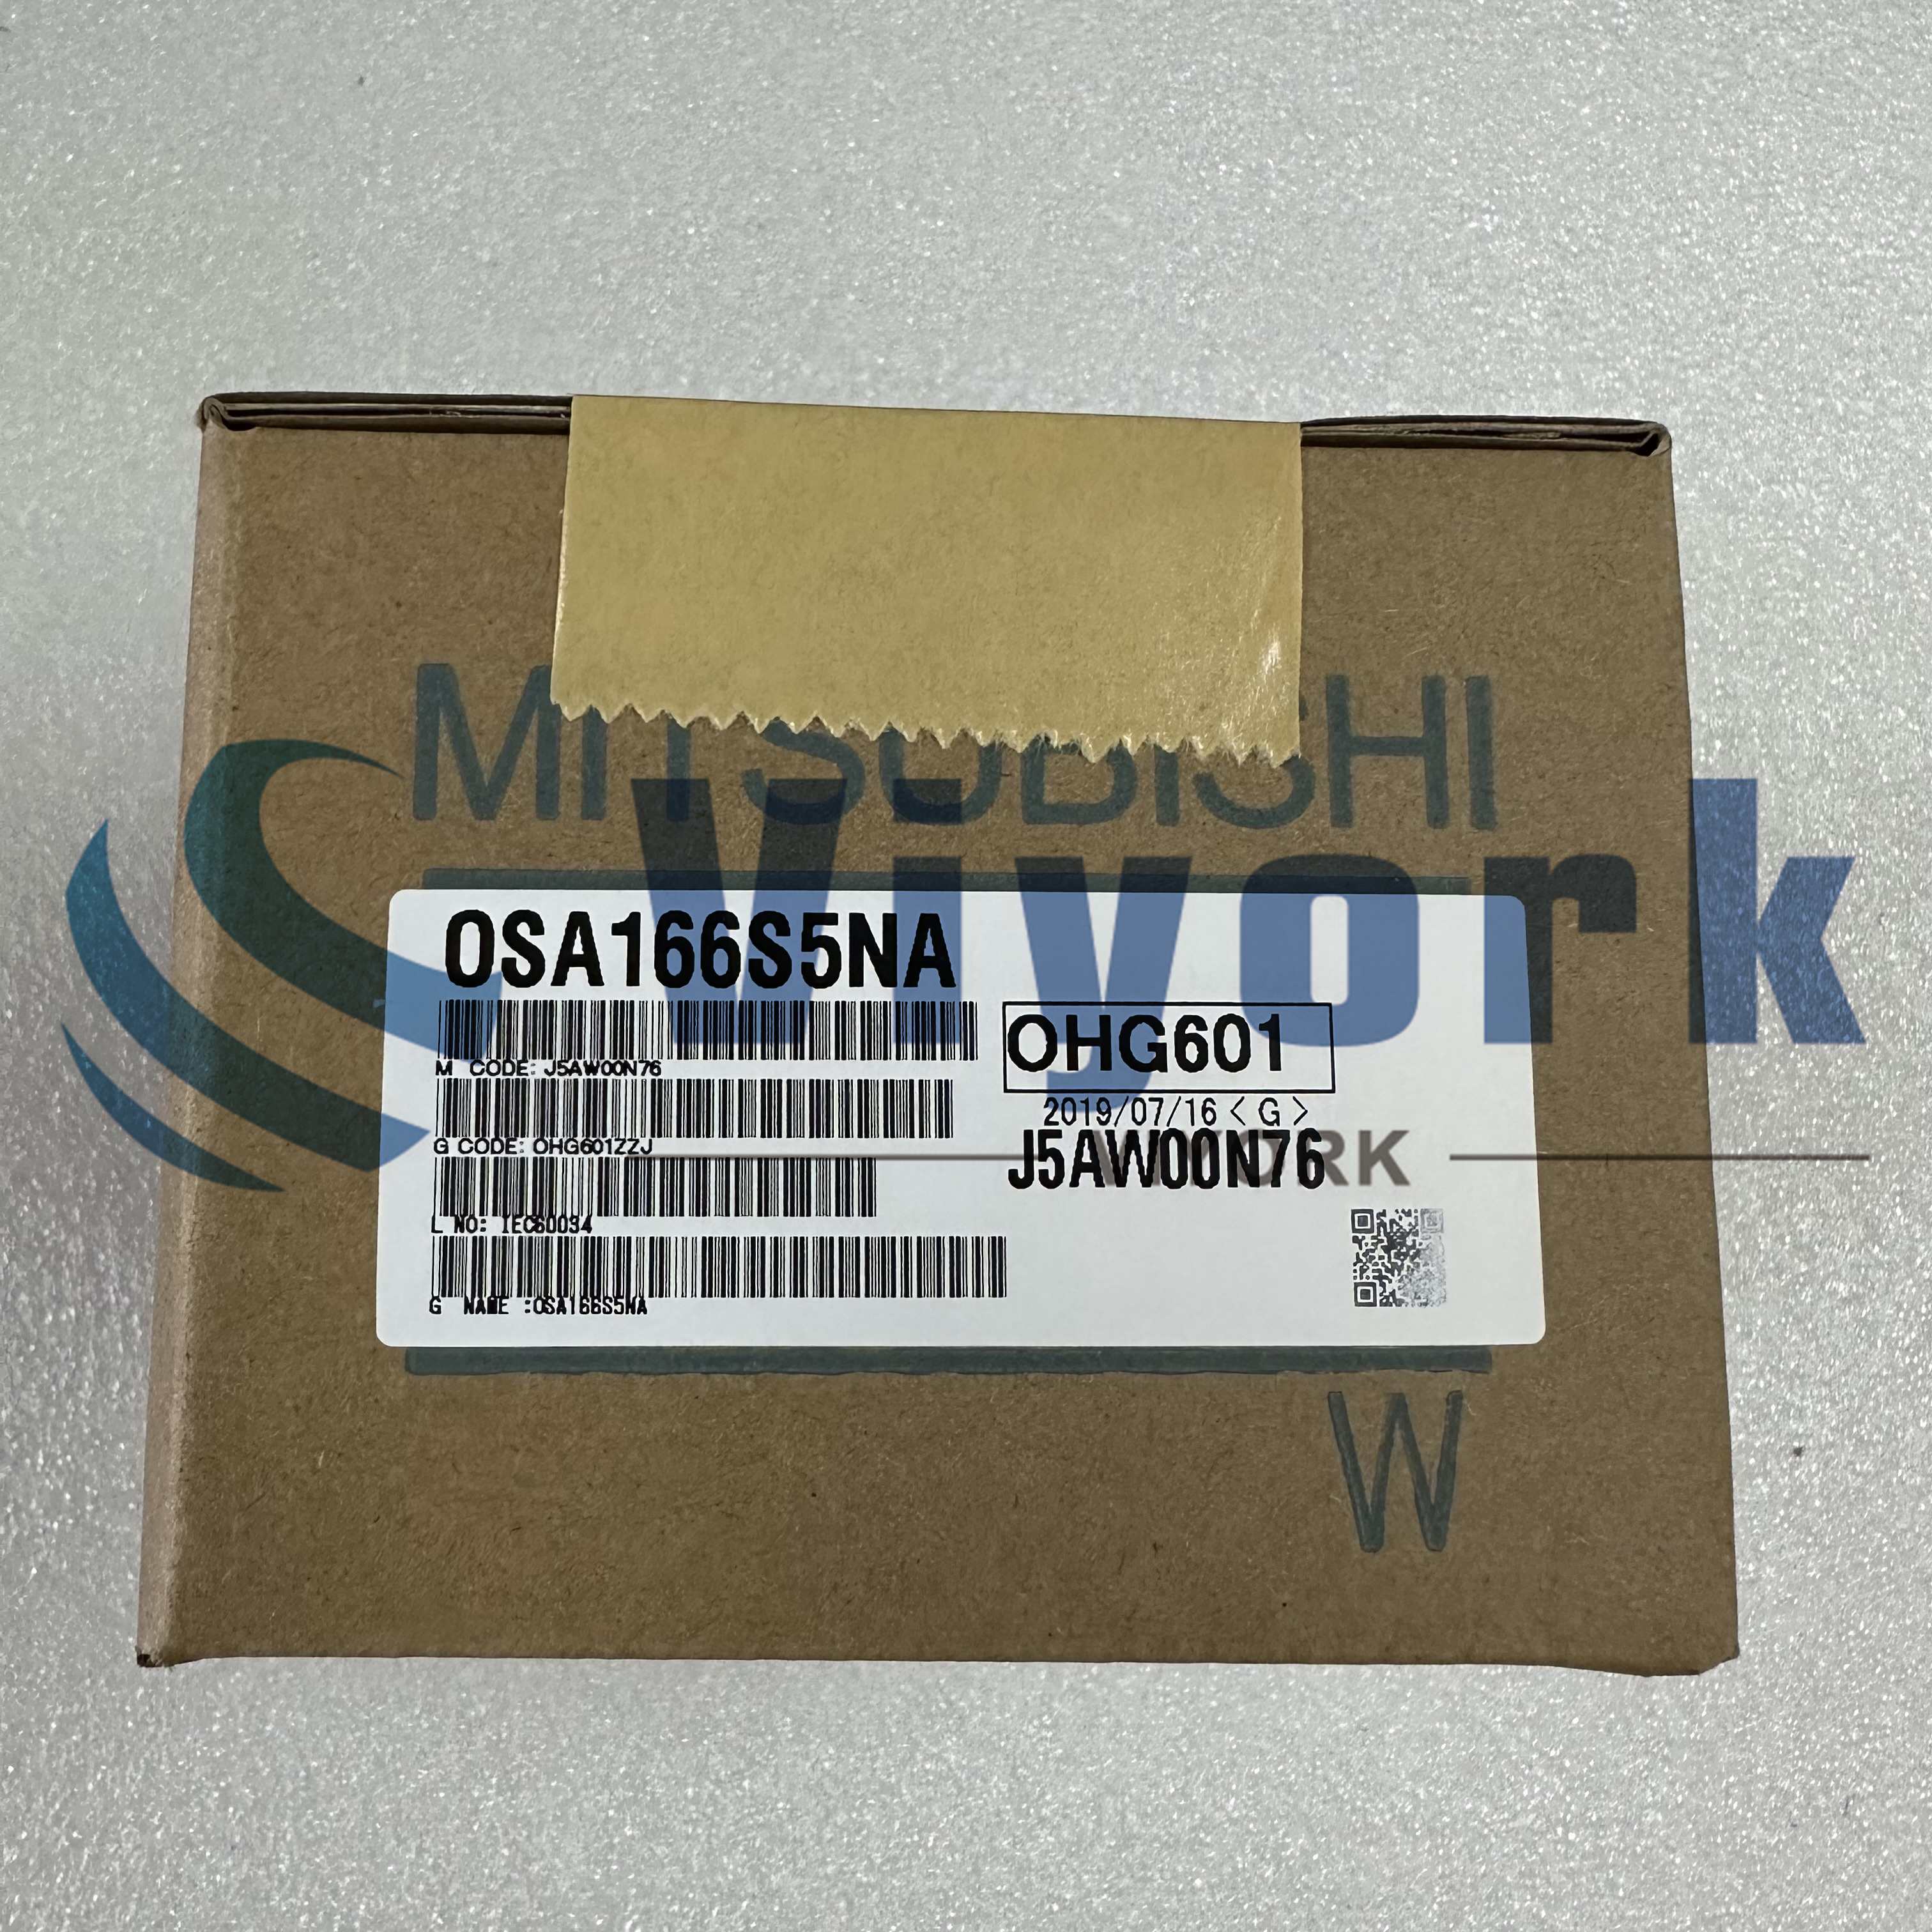 Mitsubishi OSA166S5NA ENCODER NEW